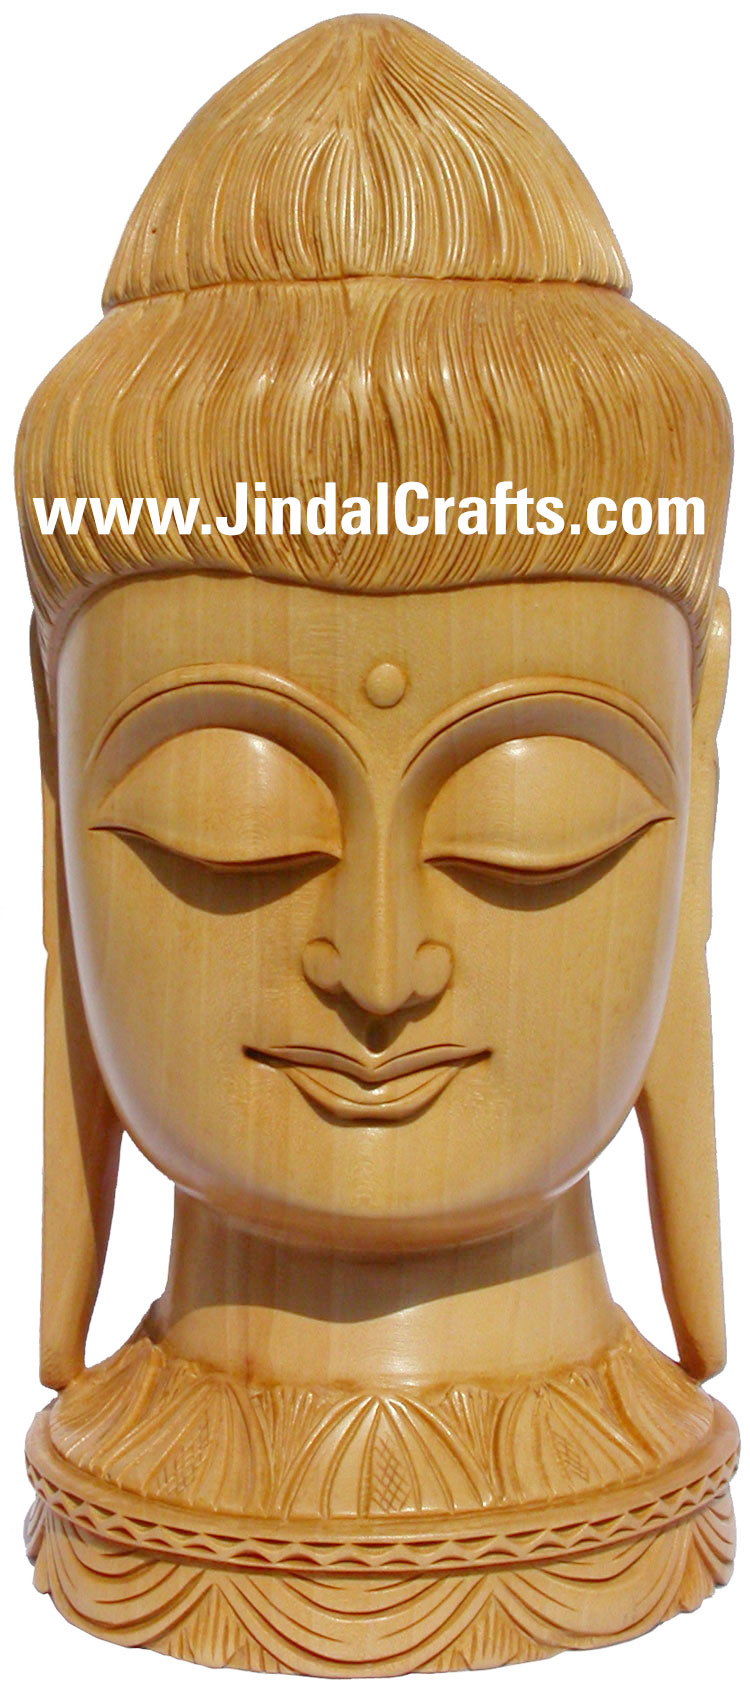 Wooden Hand Carved Gautam Buddha Head Indian Wood Figurine Art Idol Sculpture